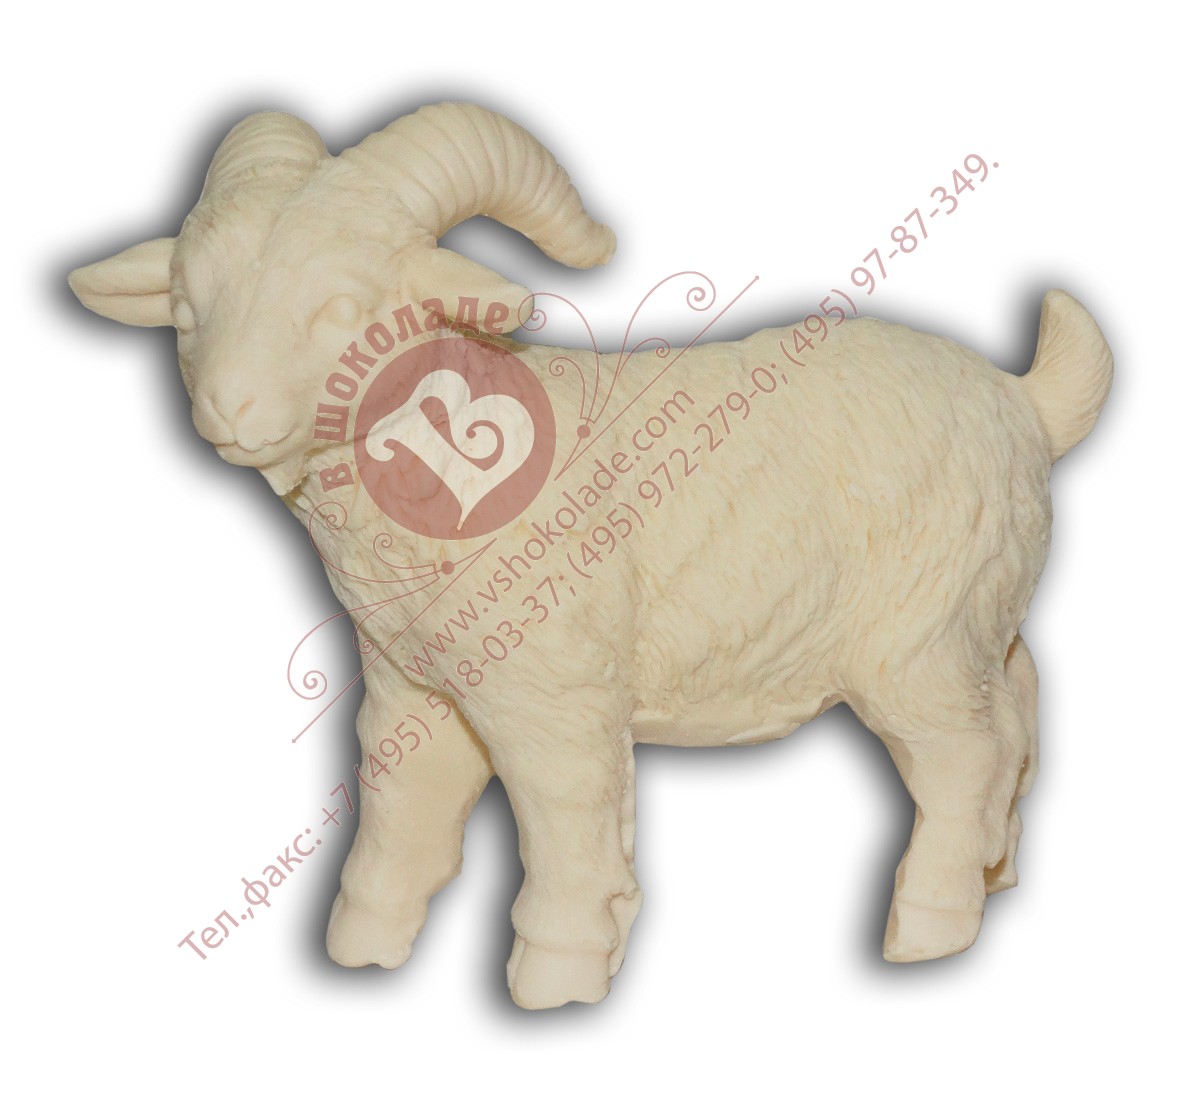 Шоколадная овечка - символ 2015 года. Артикул 2015 ovs_001